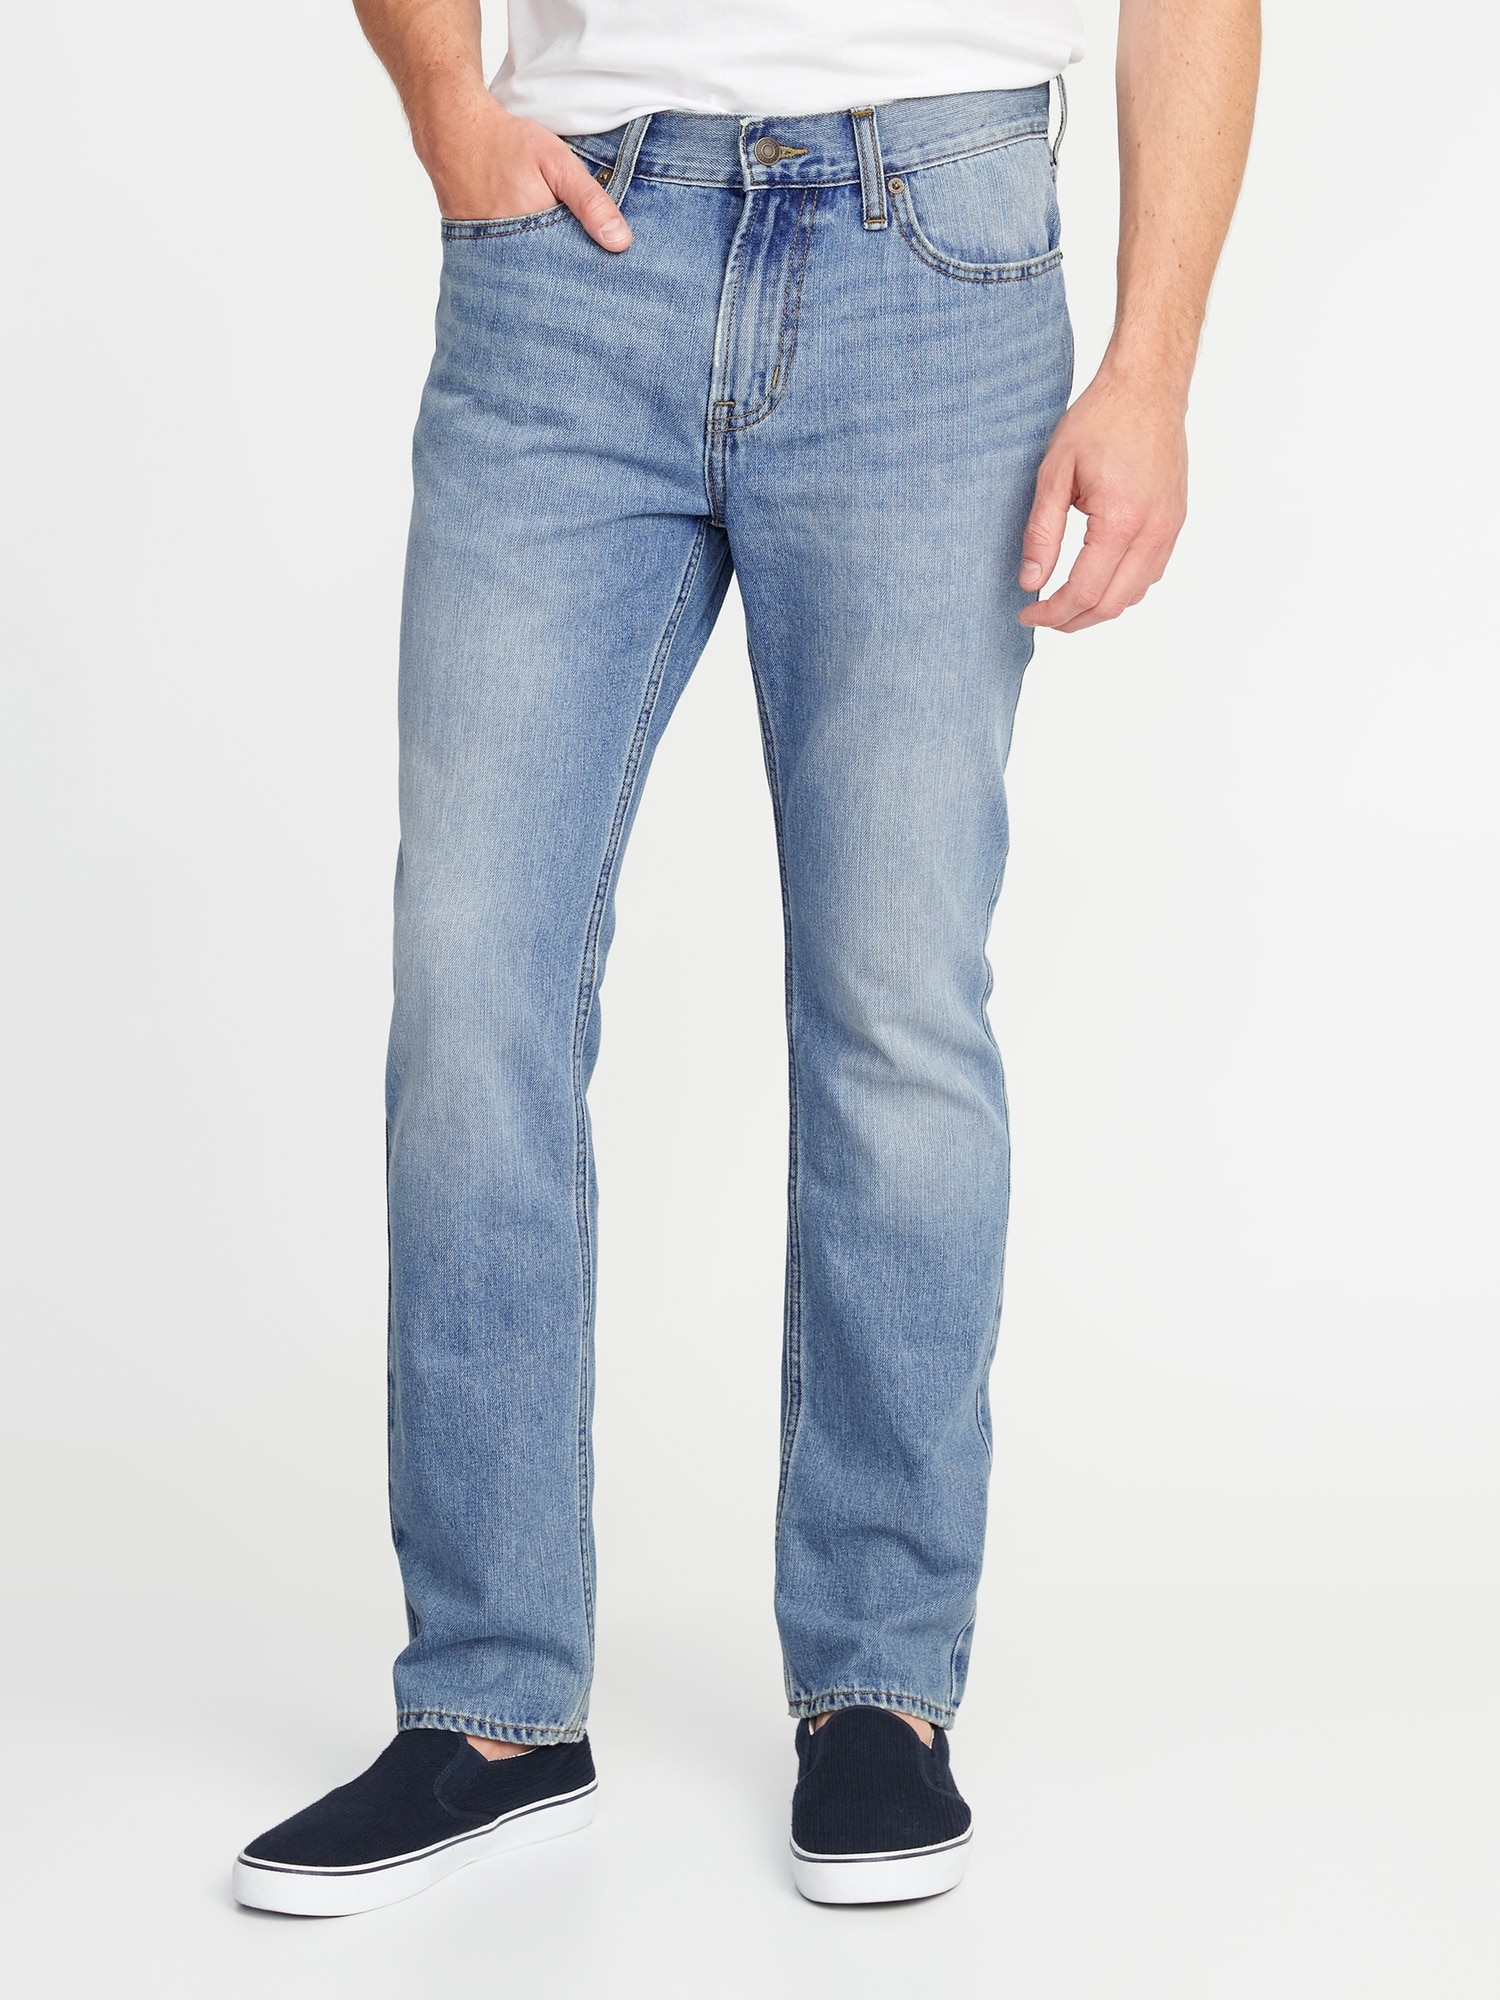 old navy rigid jeans